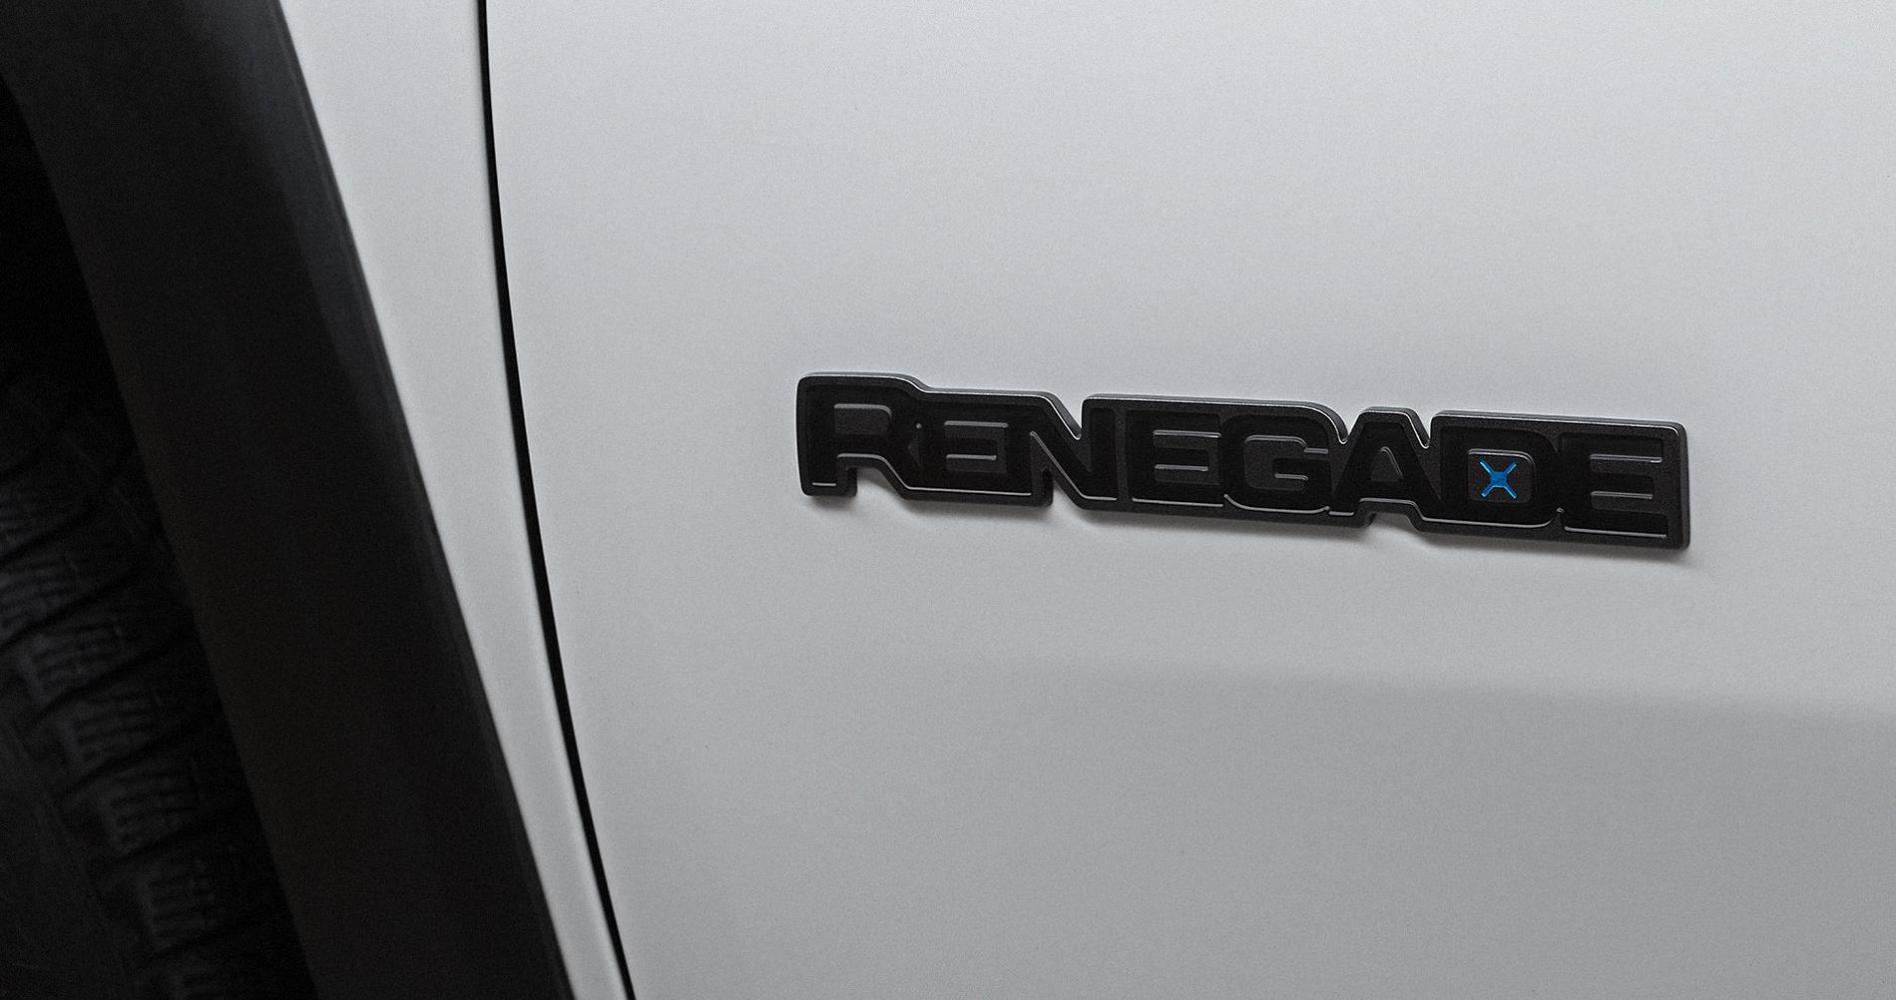 Jeep Renegade logo